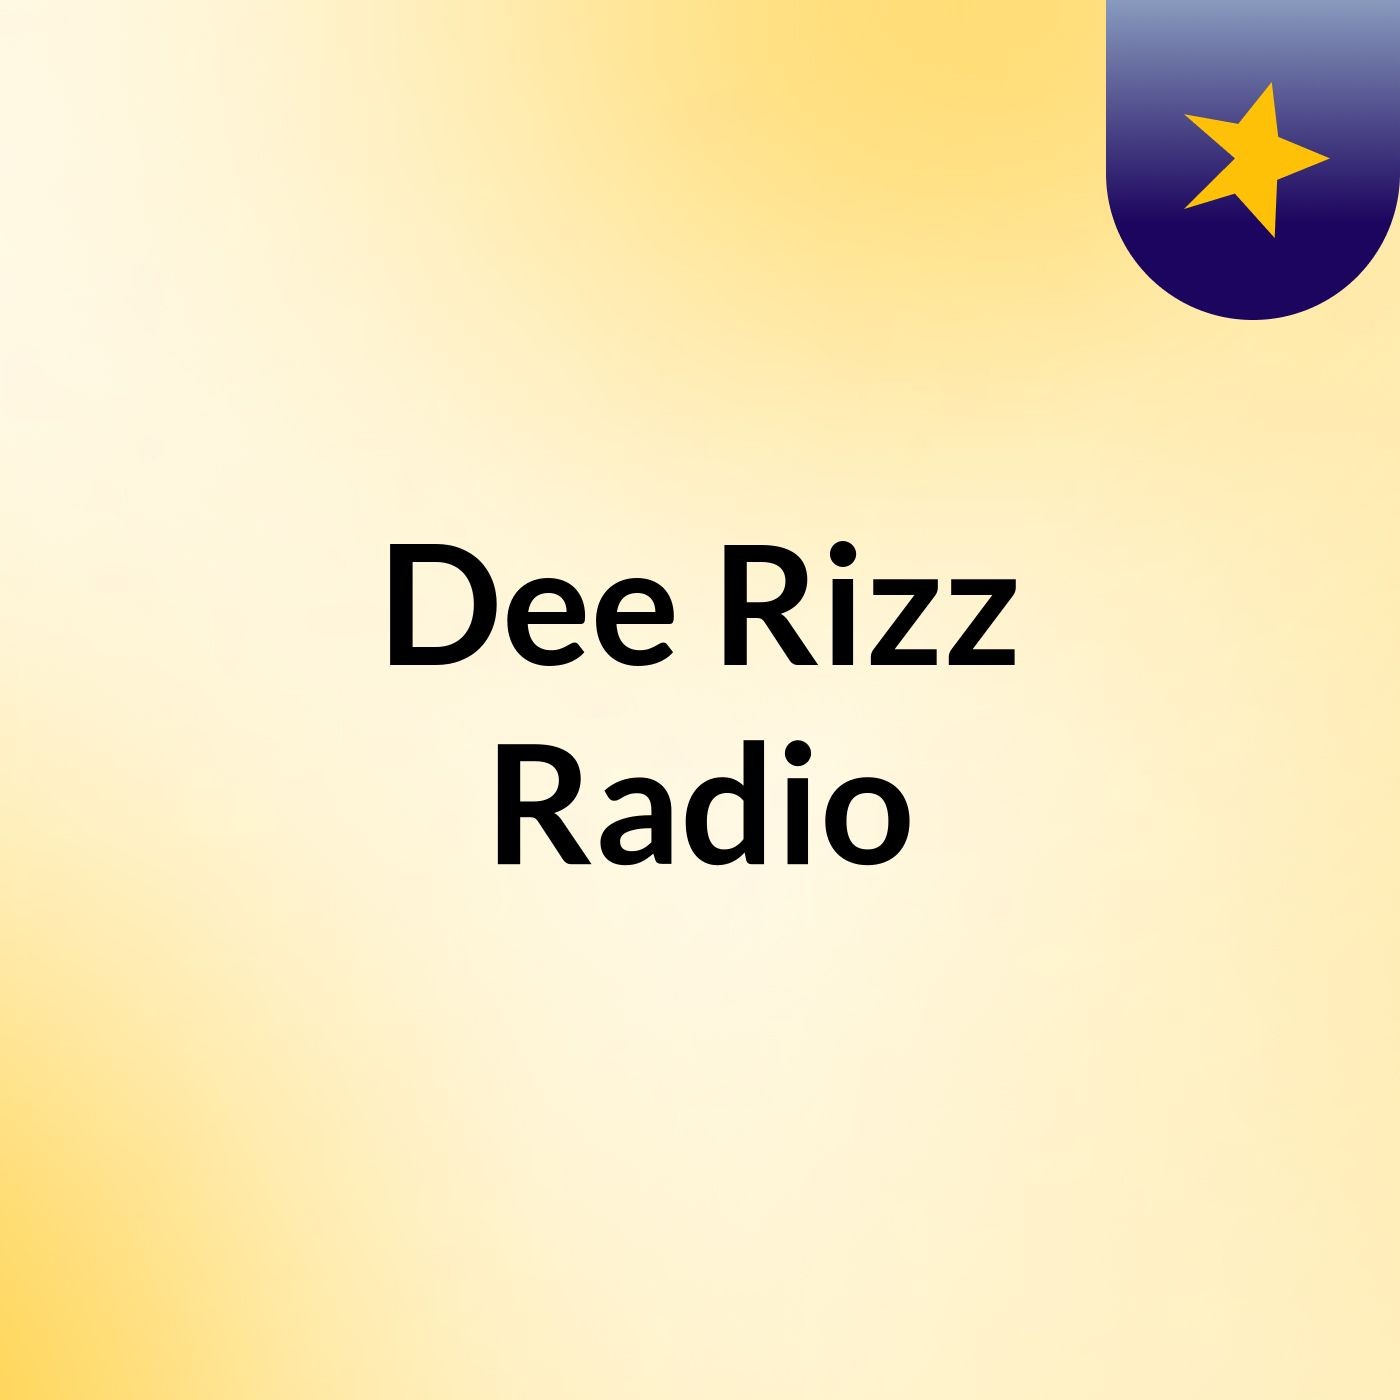 Dee Rizz Radio